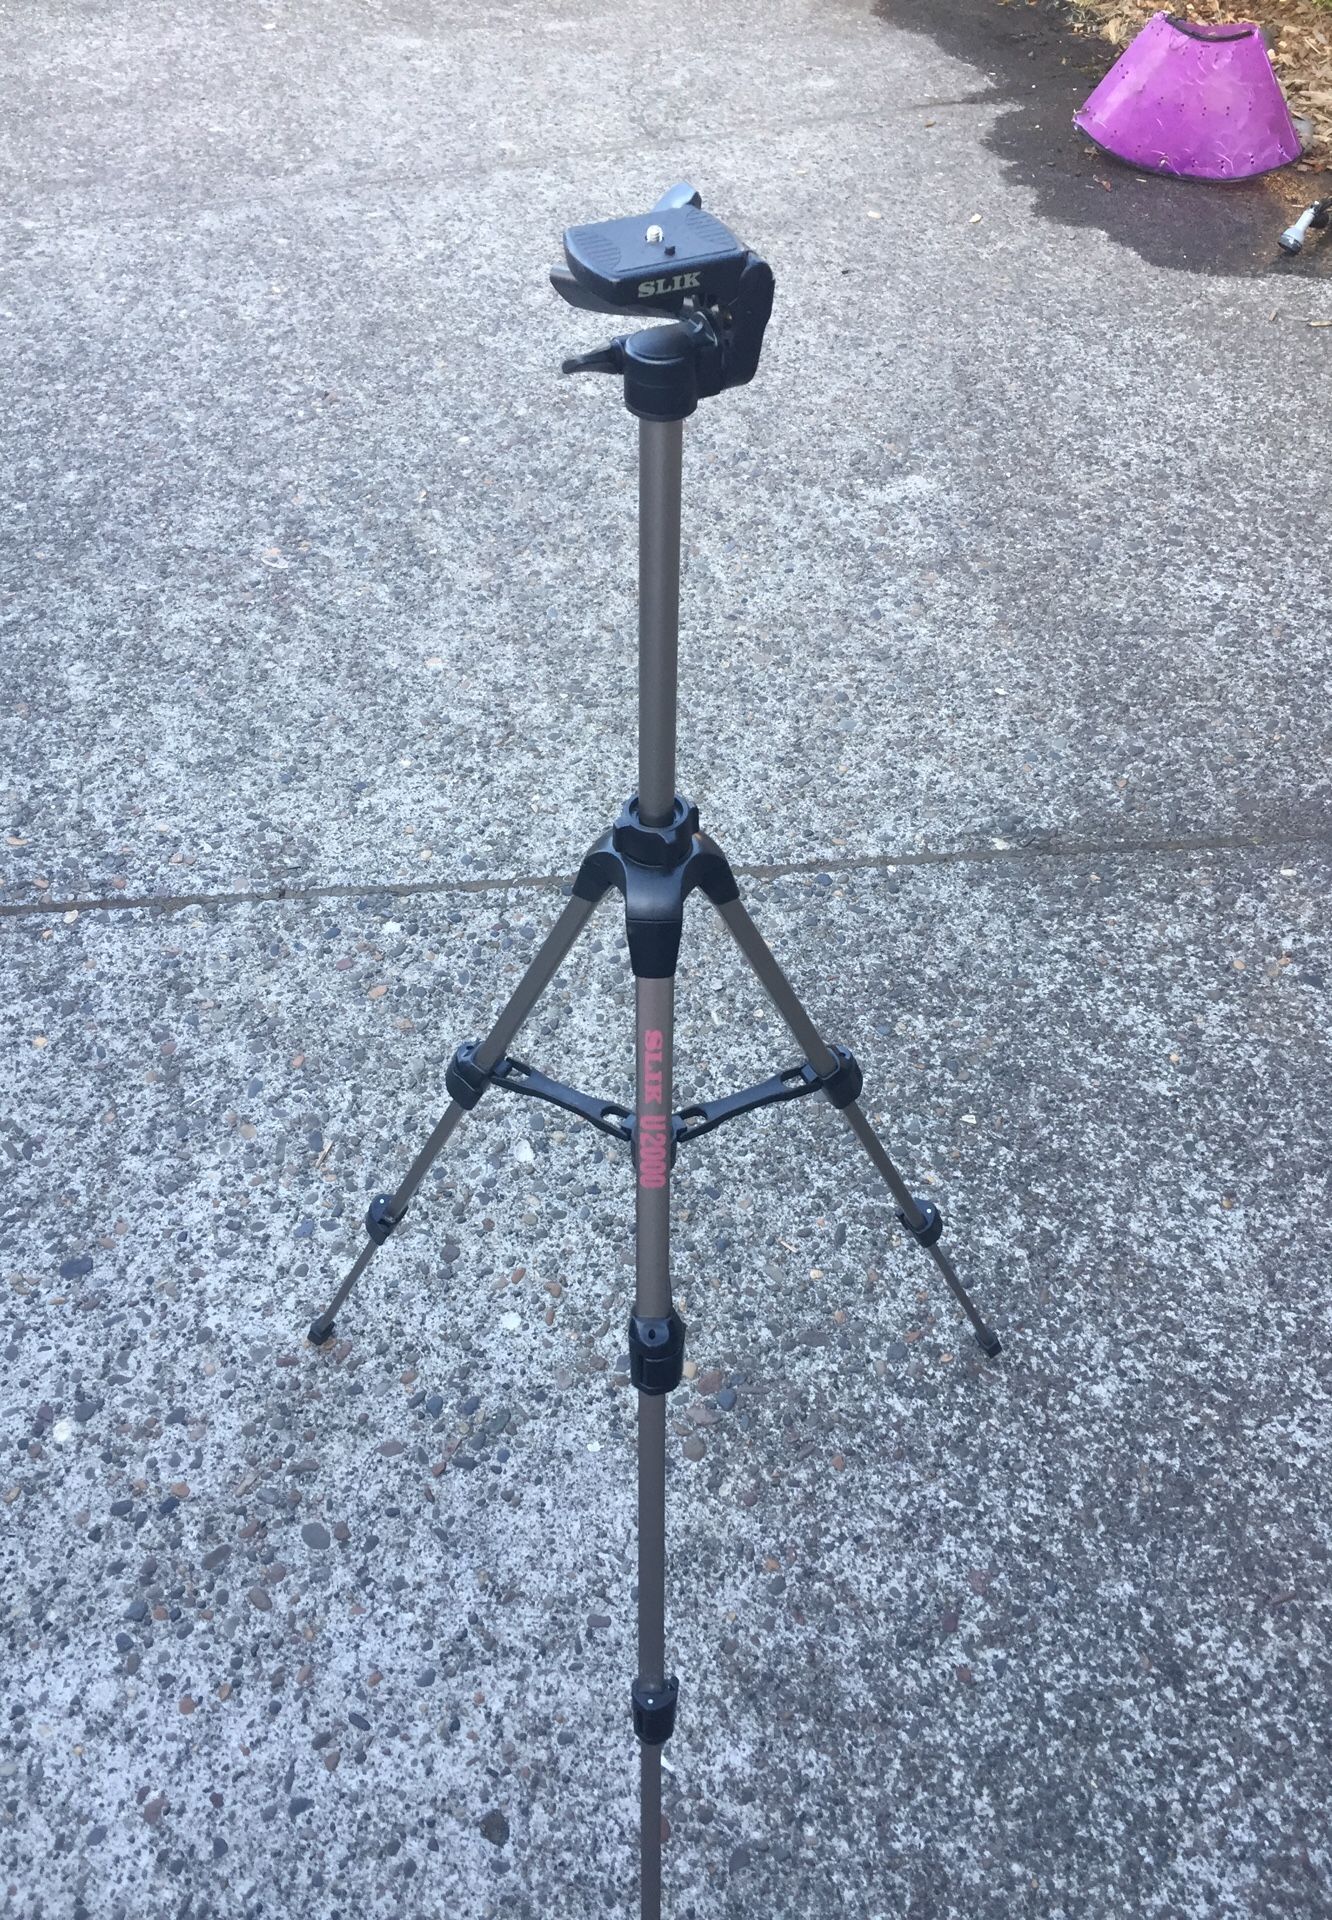 Camera stand